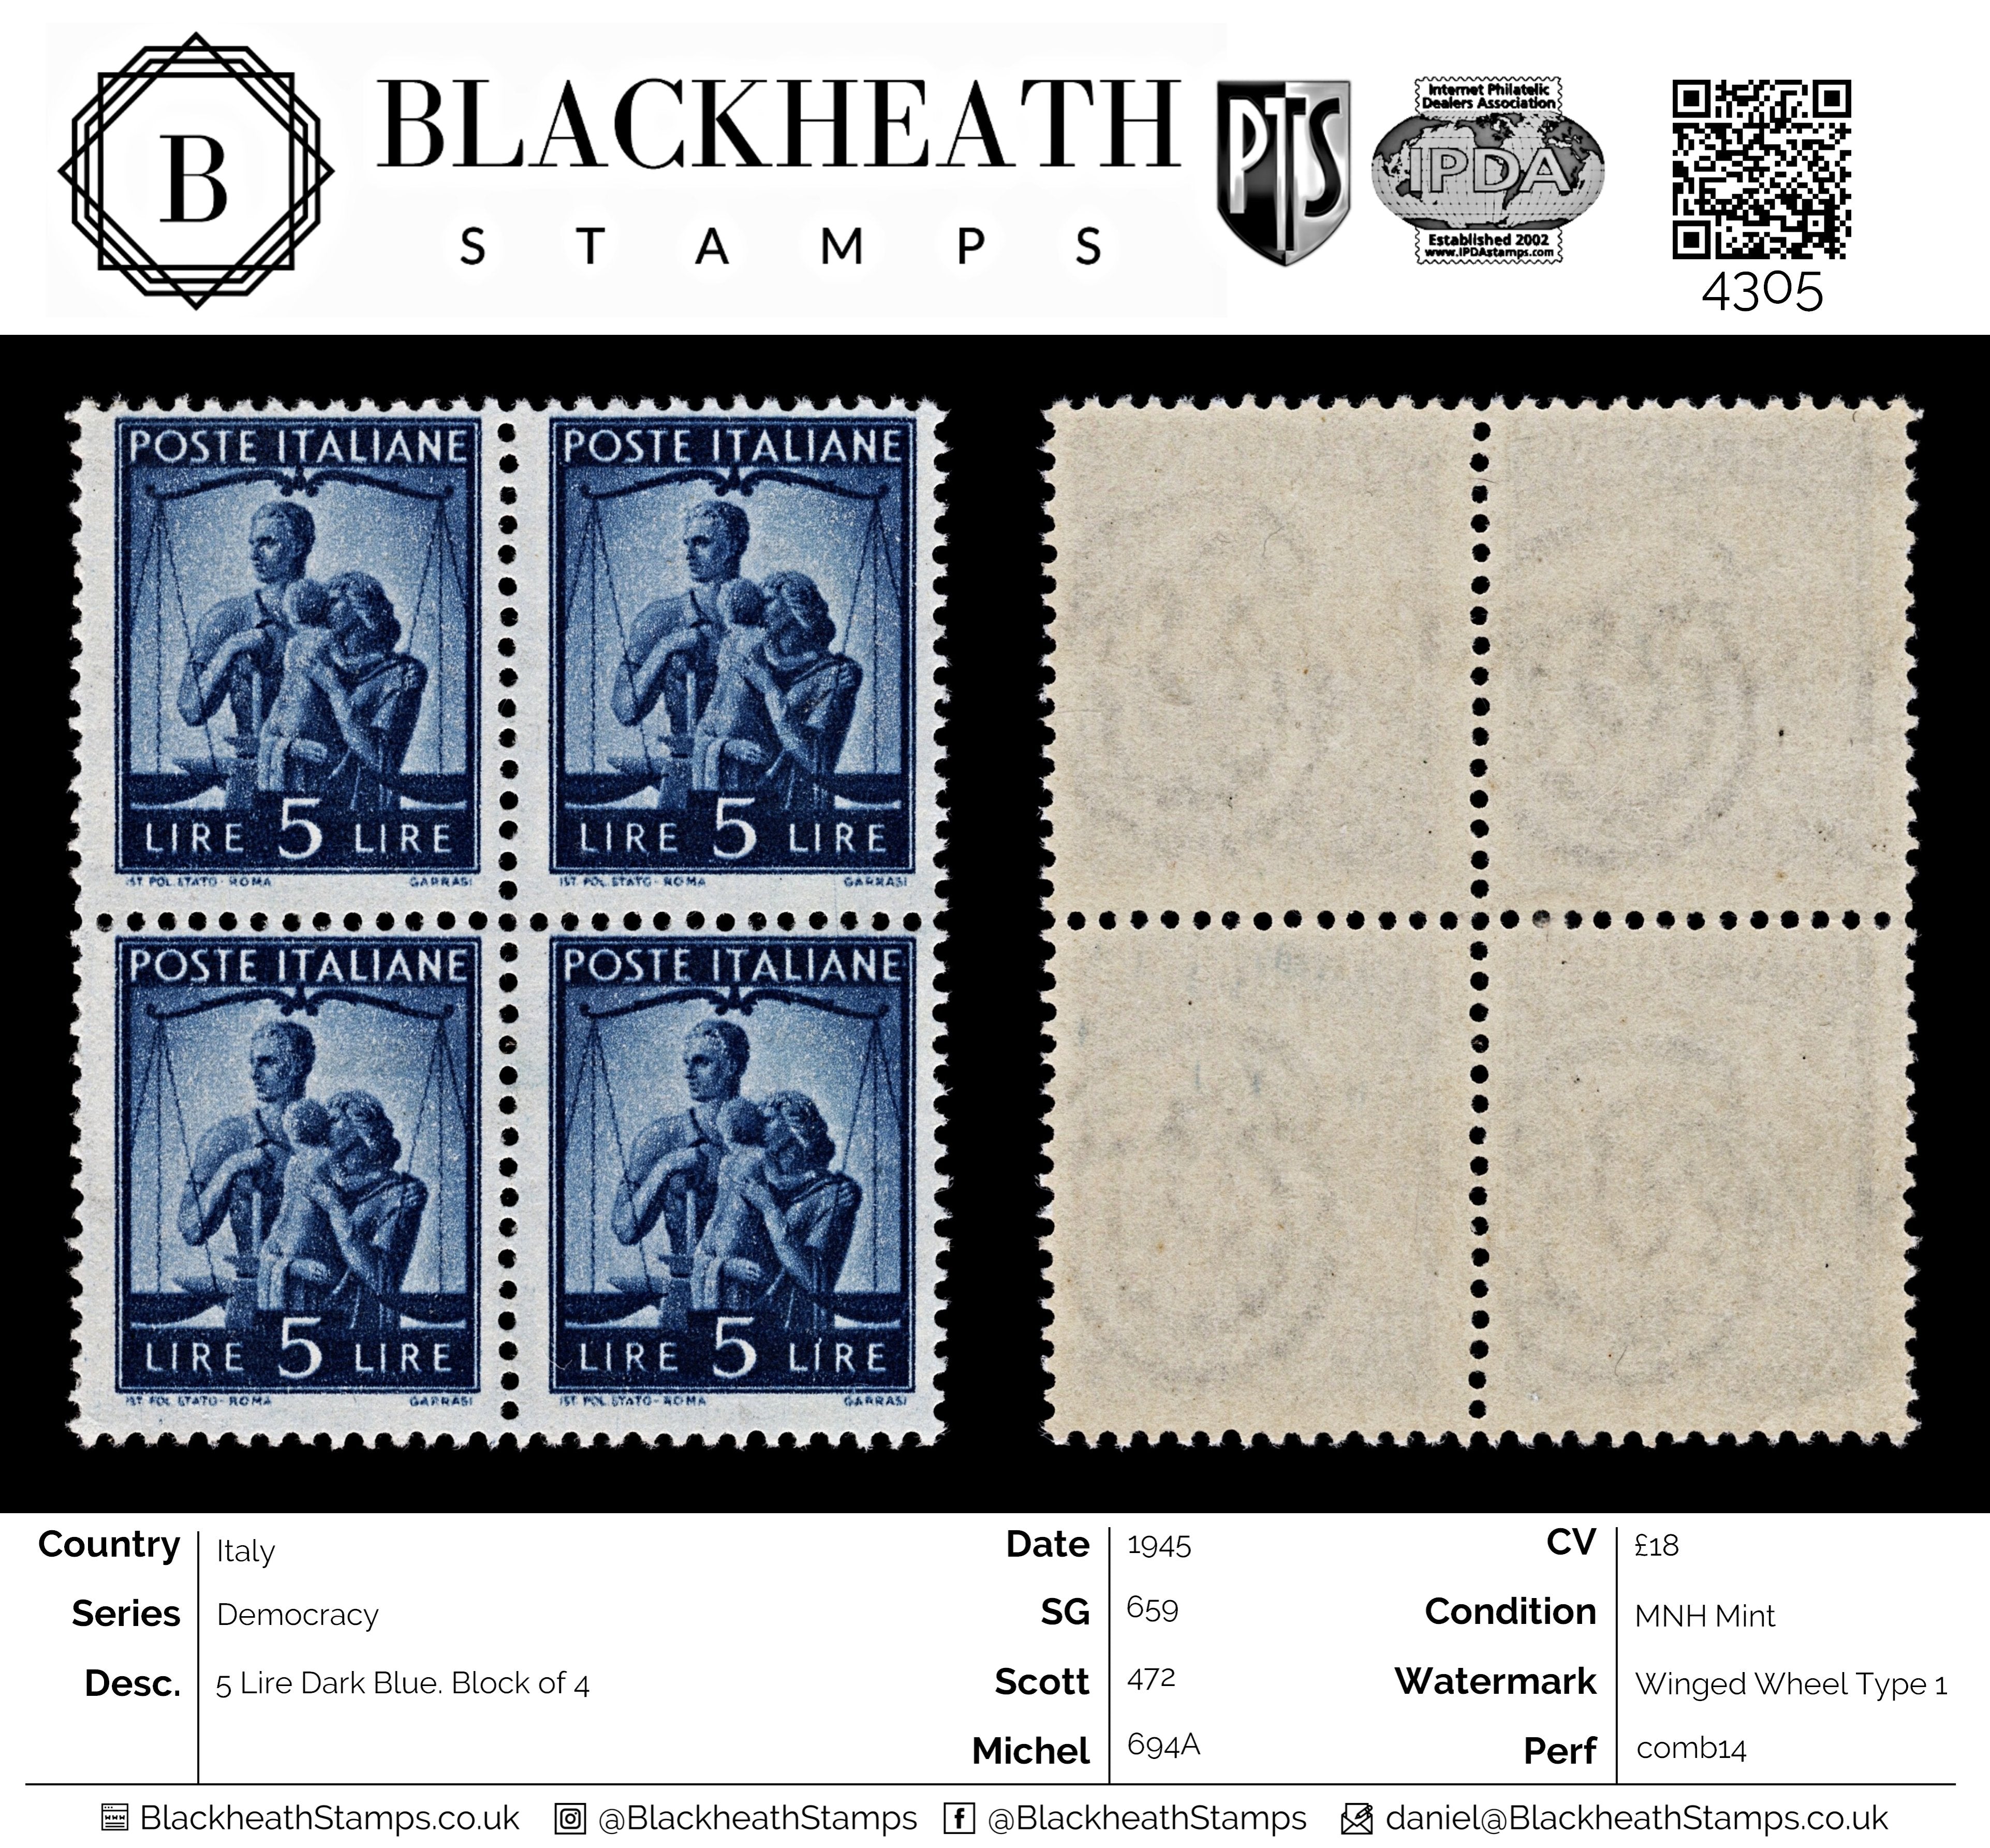 4305: Italy SG659 5 Lire Dark Blue. Block of 4. 1945. Sc#472